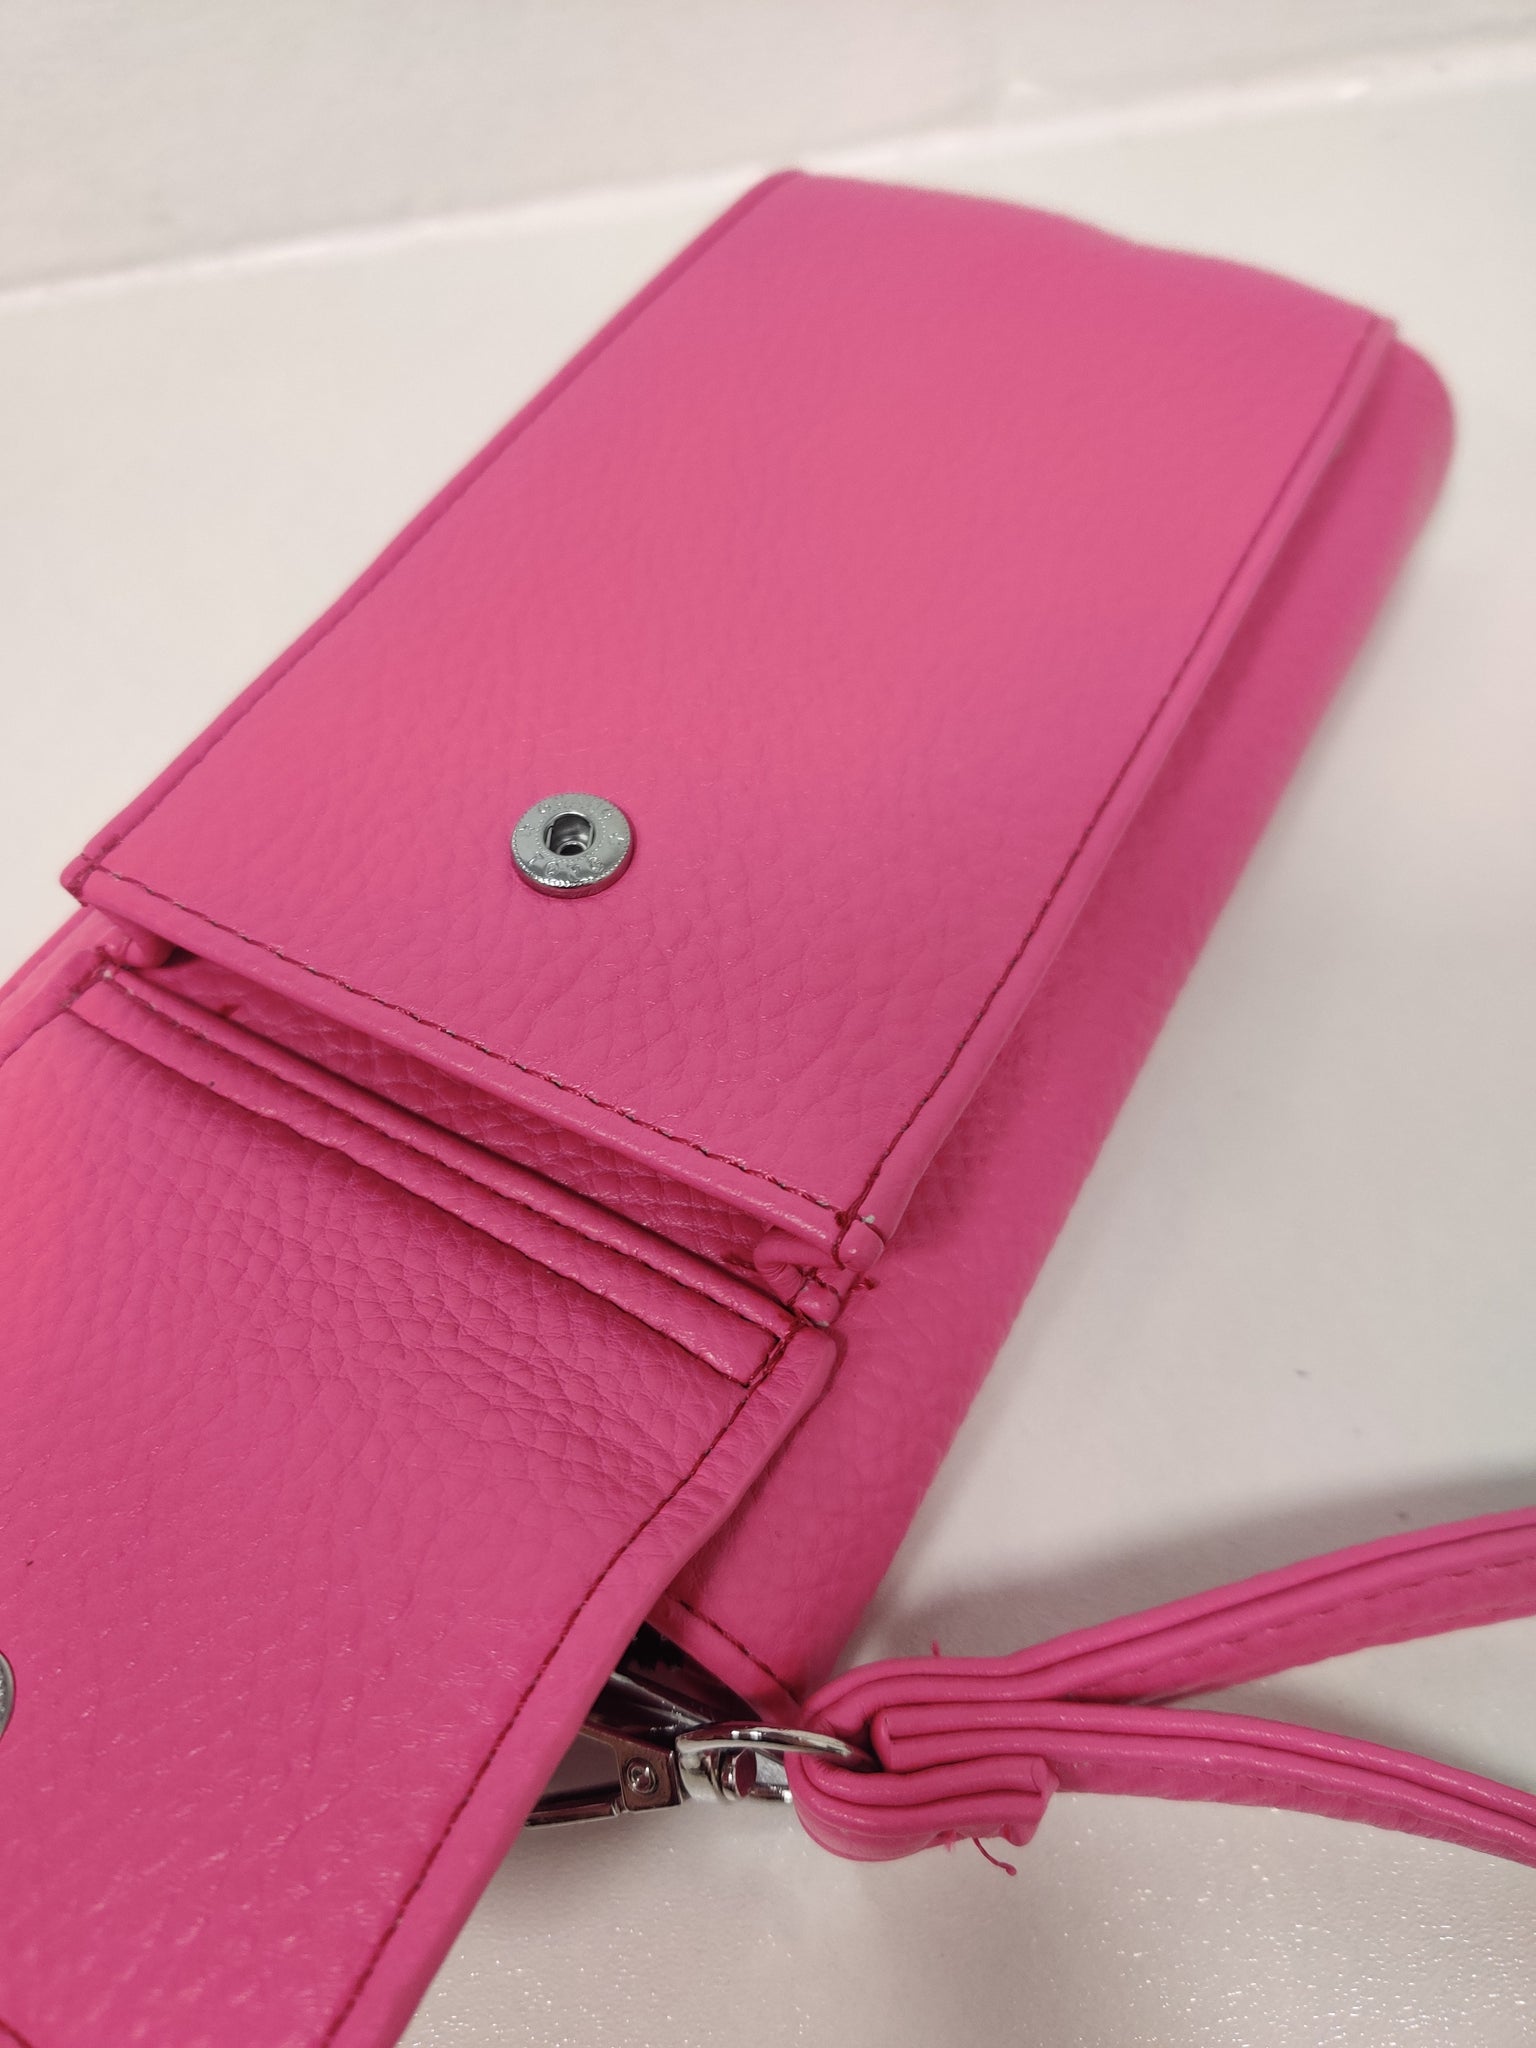 Belle Phone Purse Bag - Hot Pink